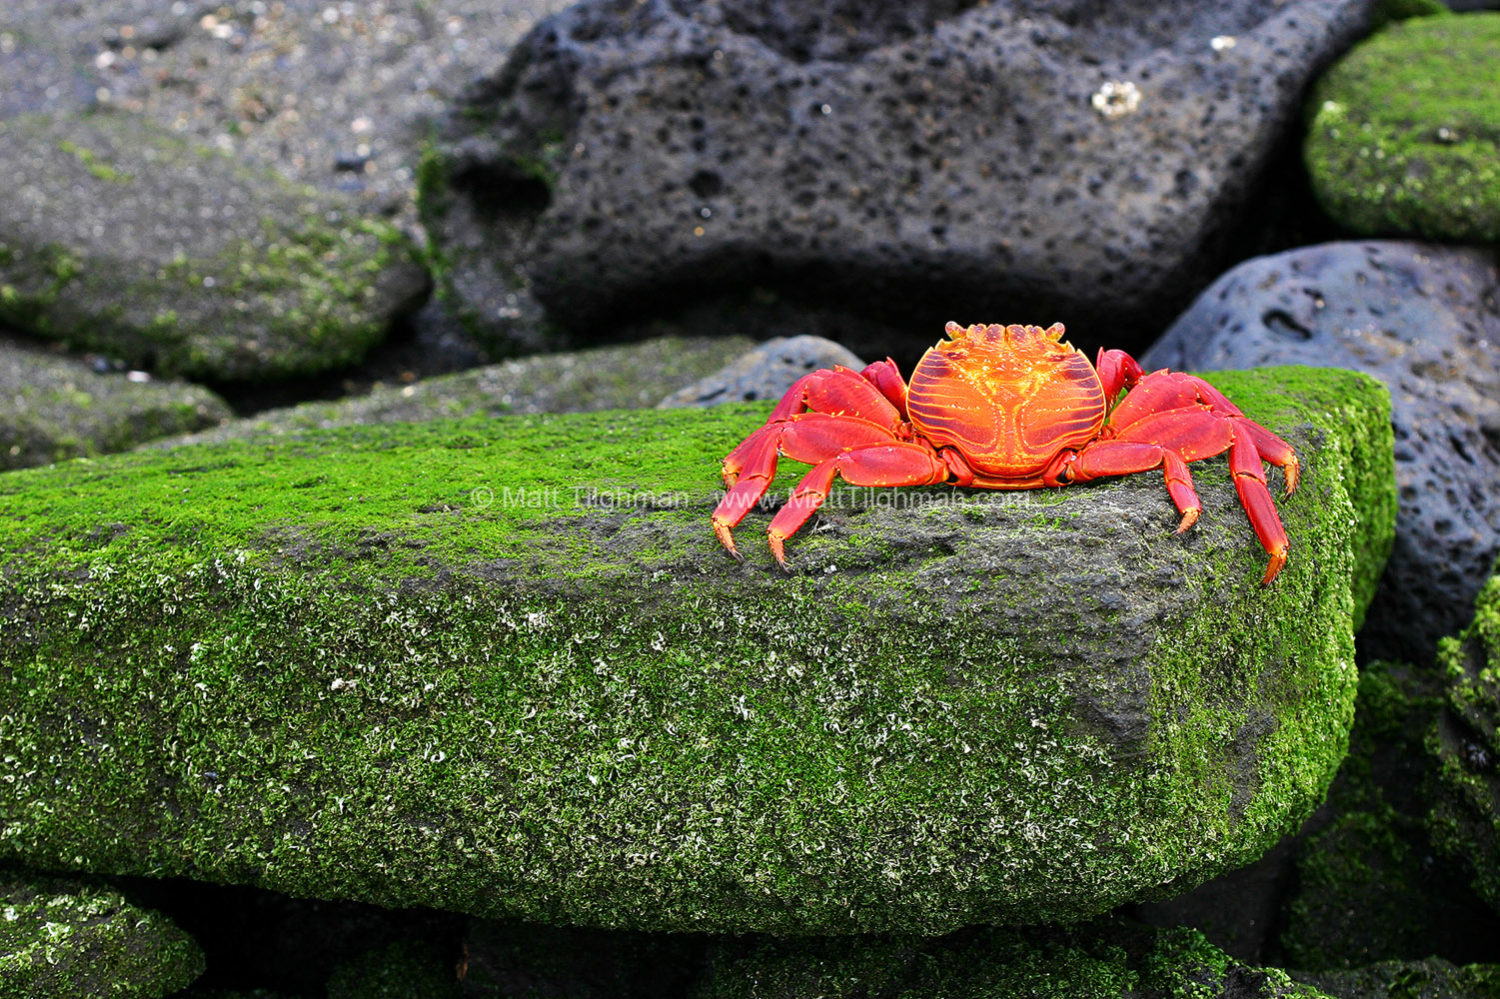 Fine art stock nature photograph of a Sally Lightfoot crab (Graspus graspus) atop an algae-covered rock, in the Galapagos Islands of Ecuador.